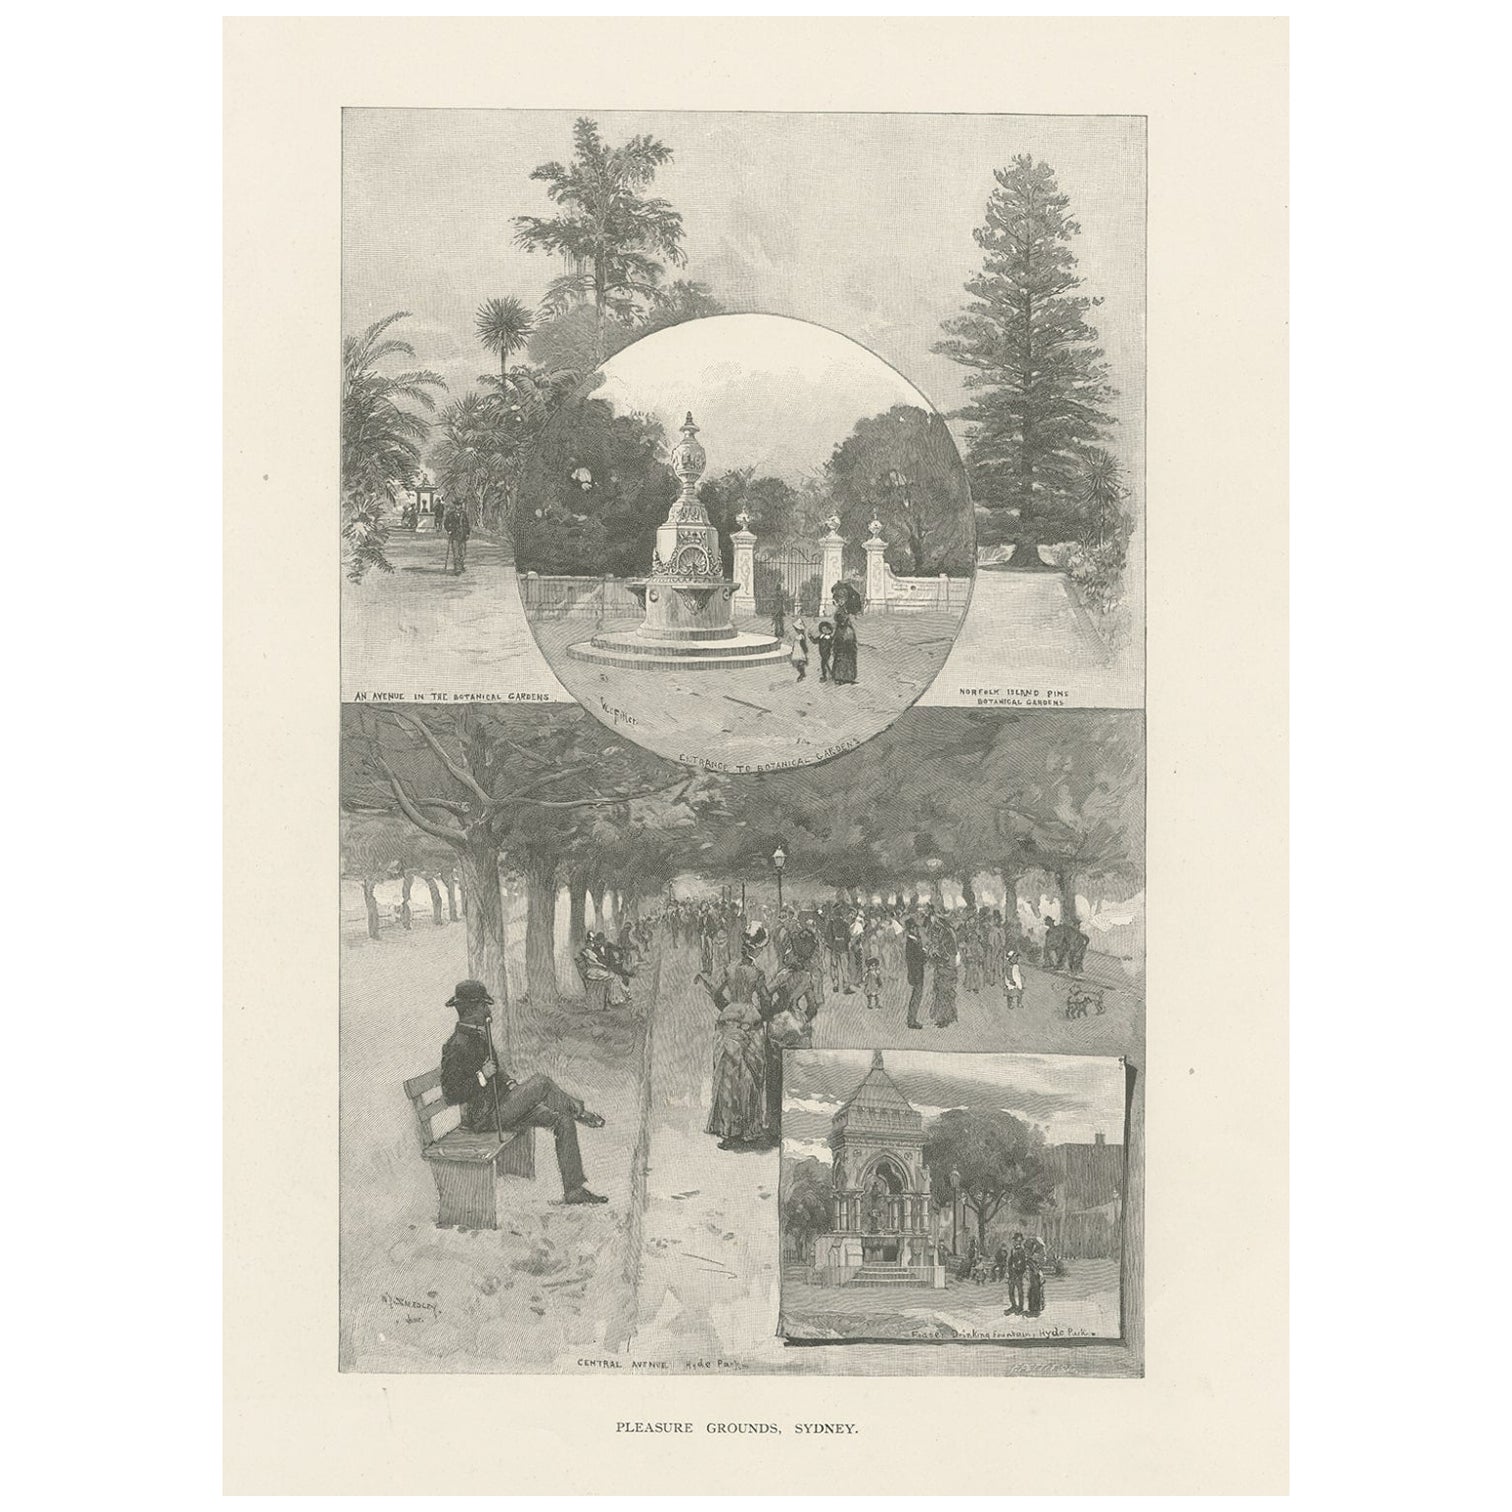 Antique Print with Views of Sydney in Australia, c.1886